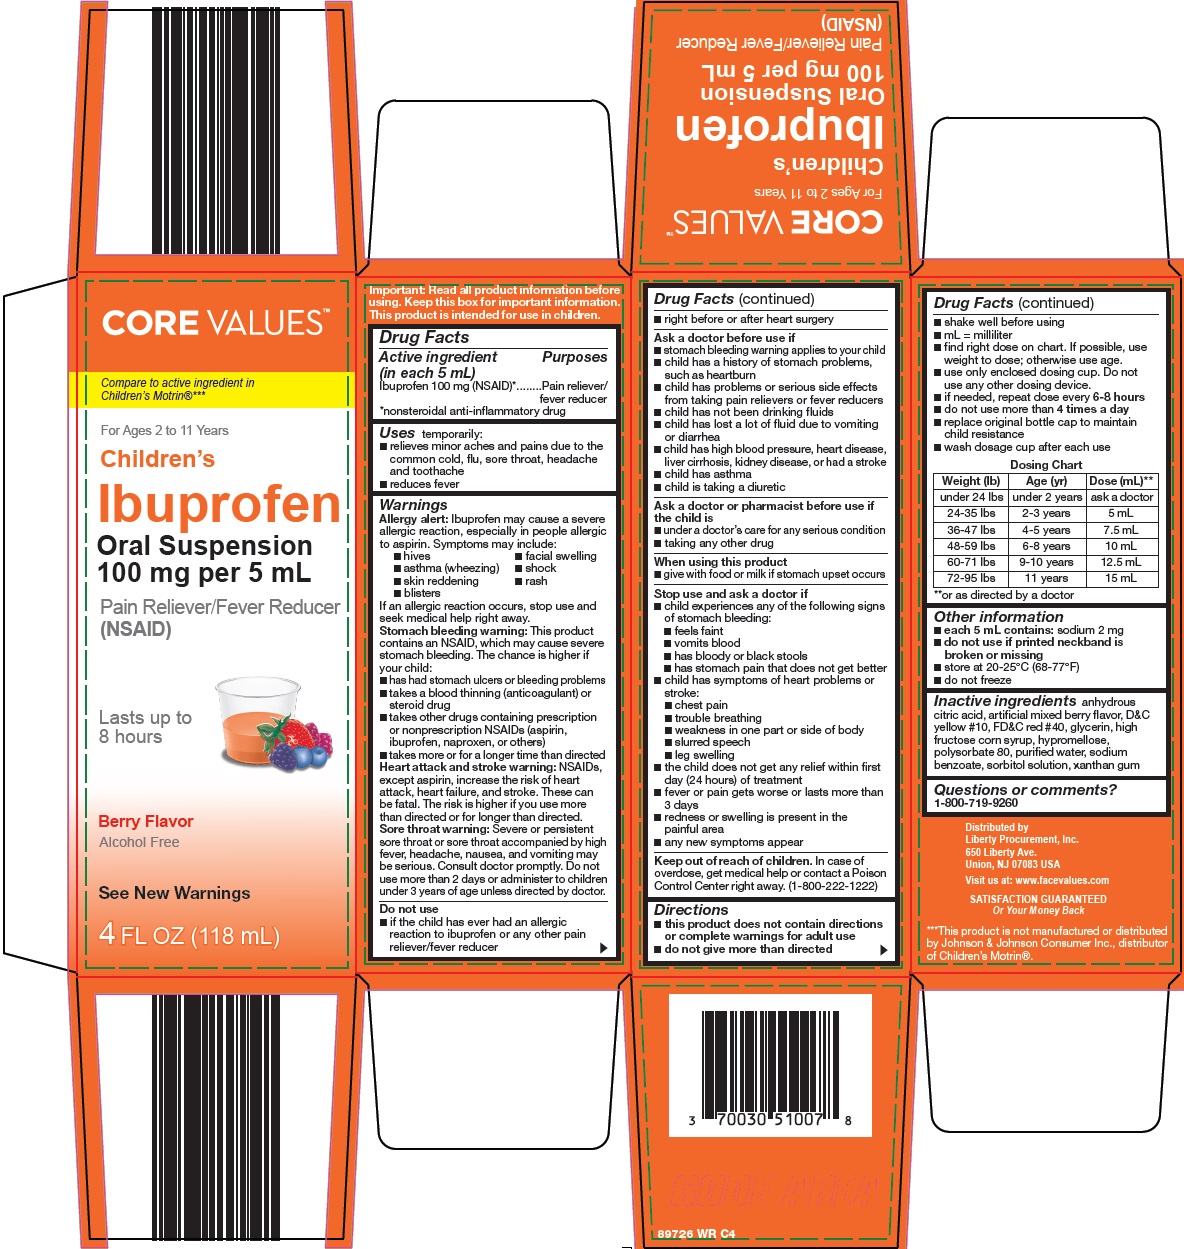 897-wr-ibuprofen.jpg